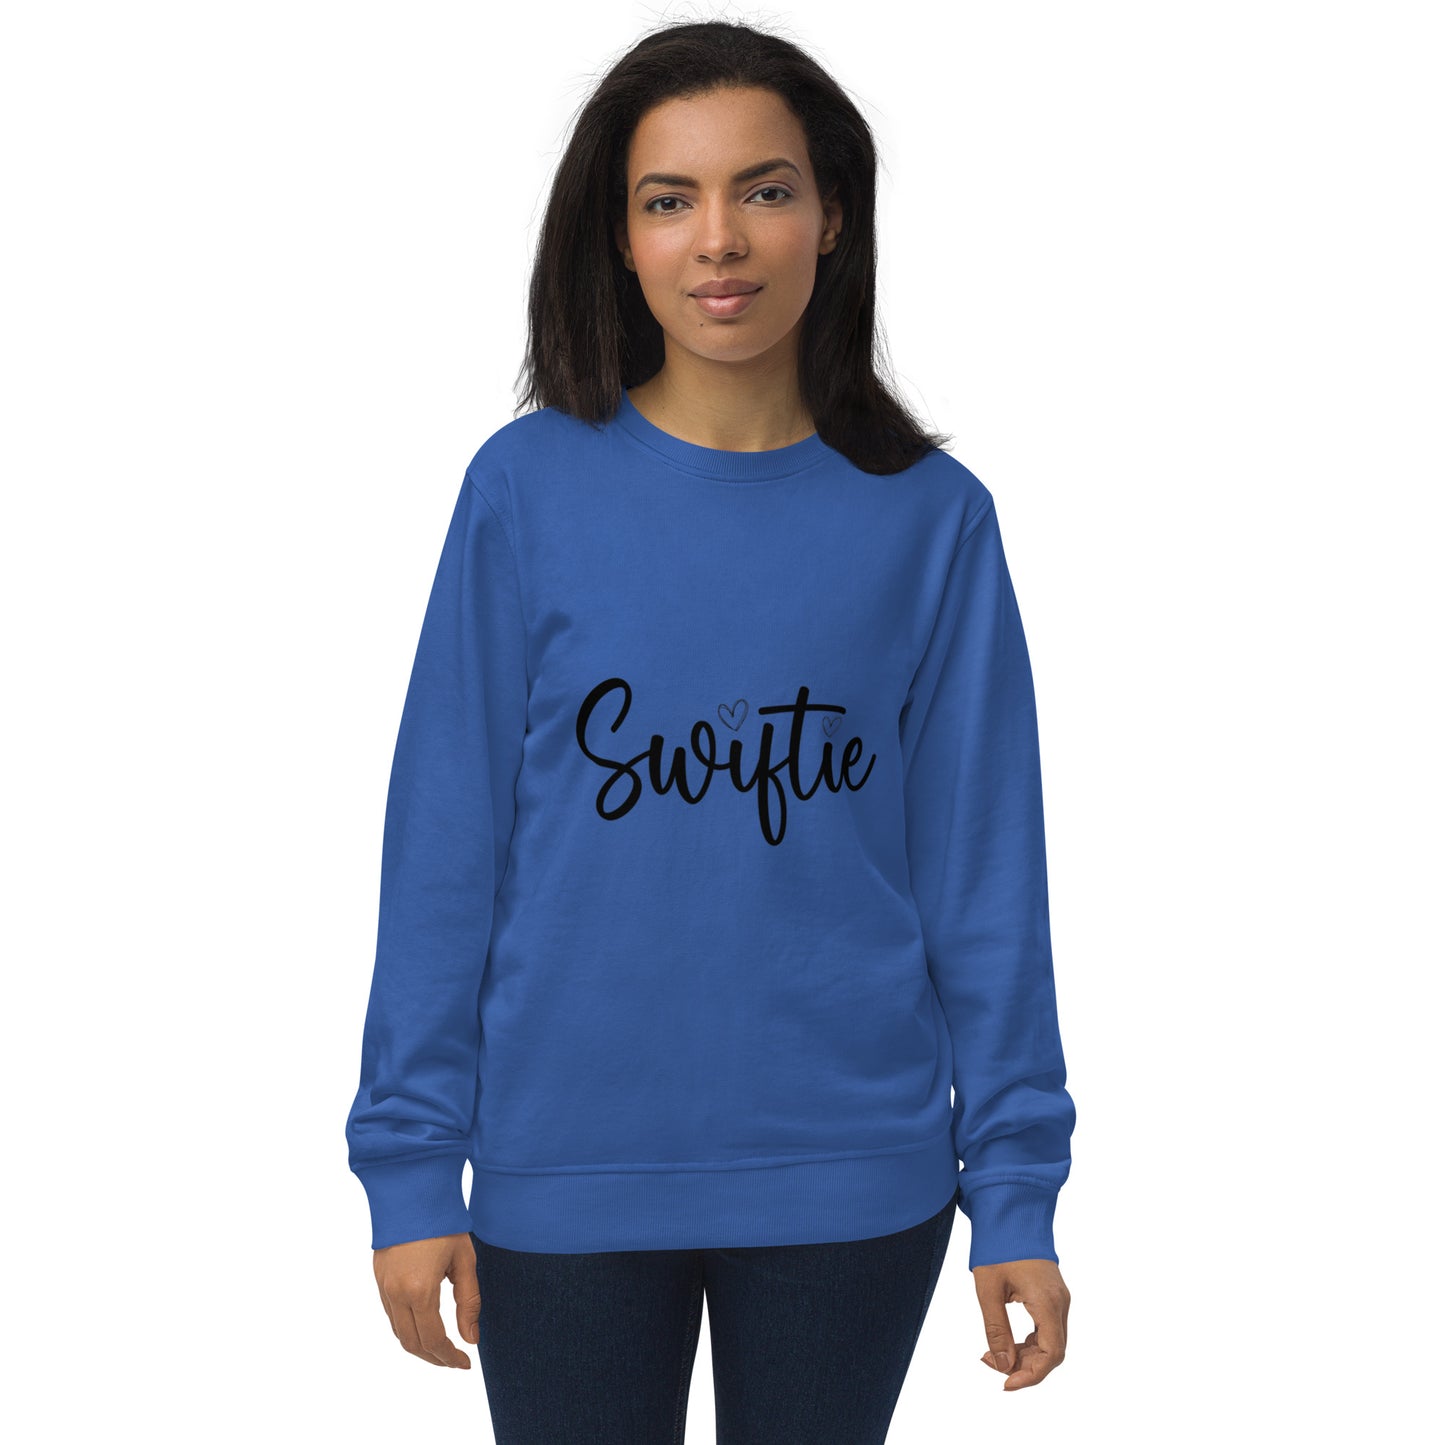 Swiftie unisex organic sweatshirt